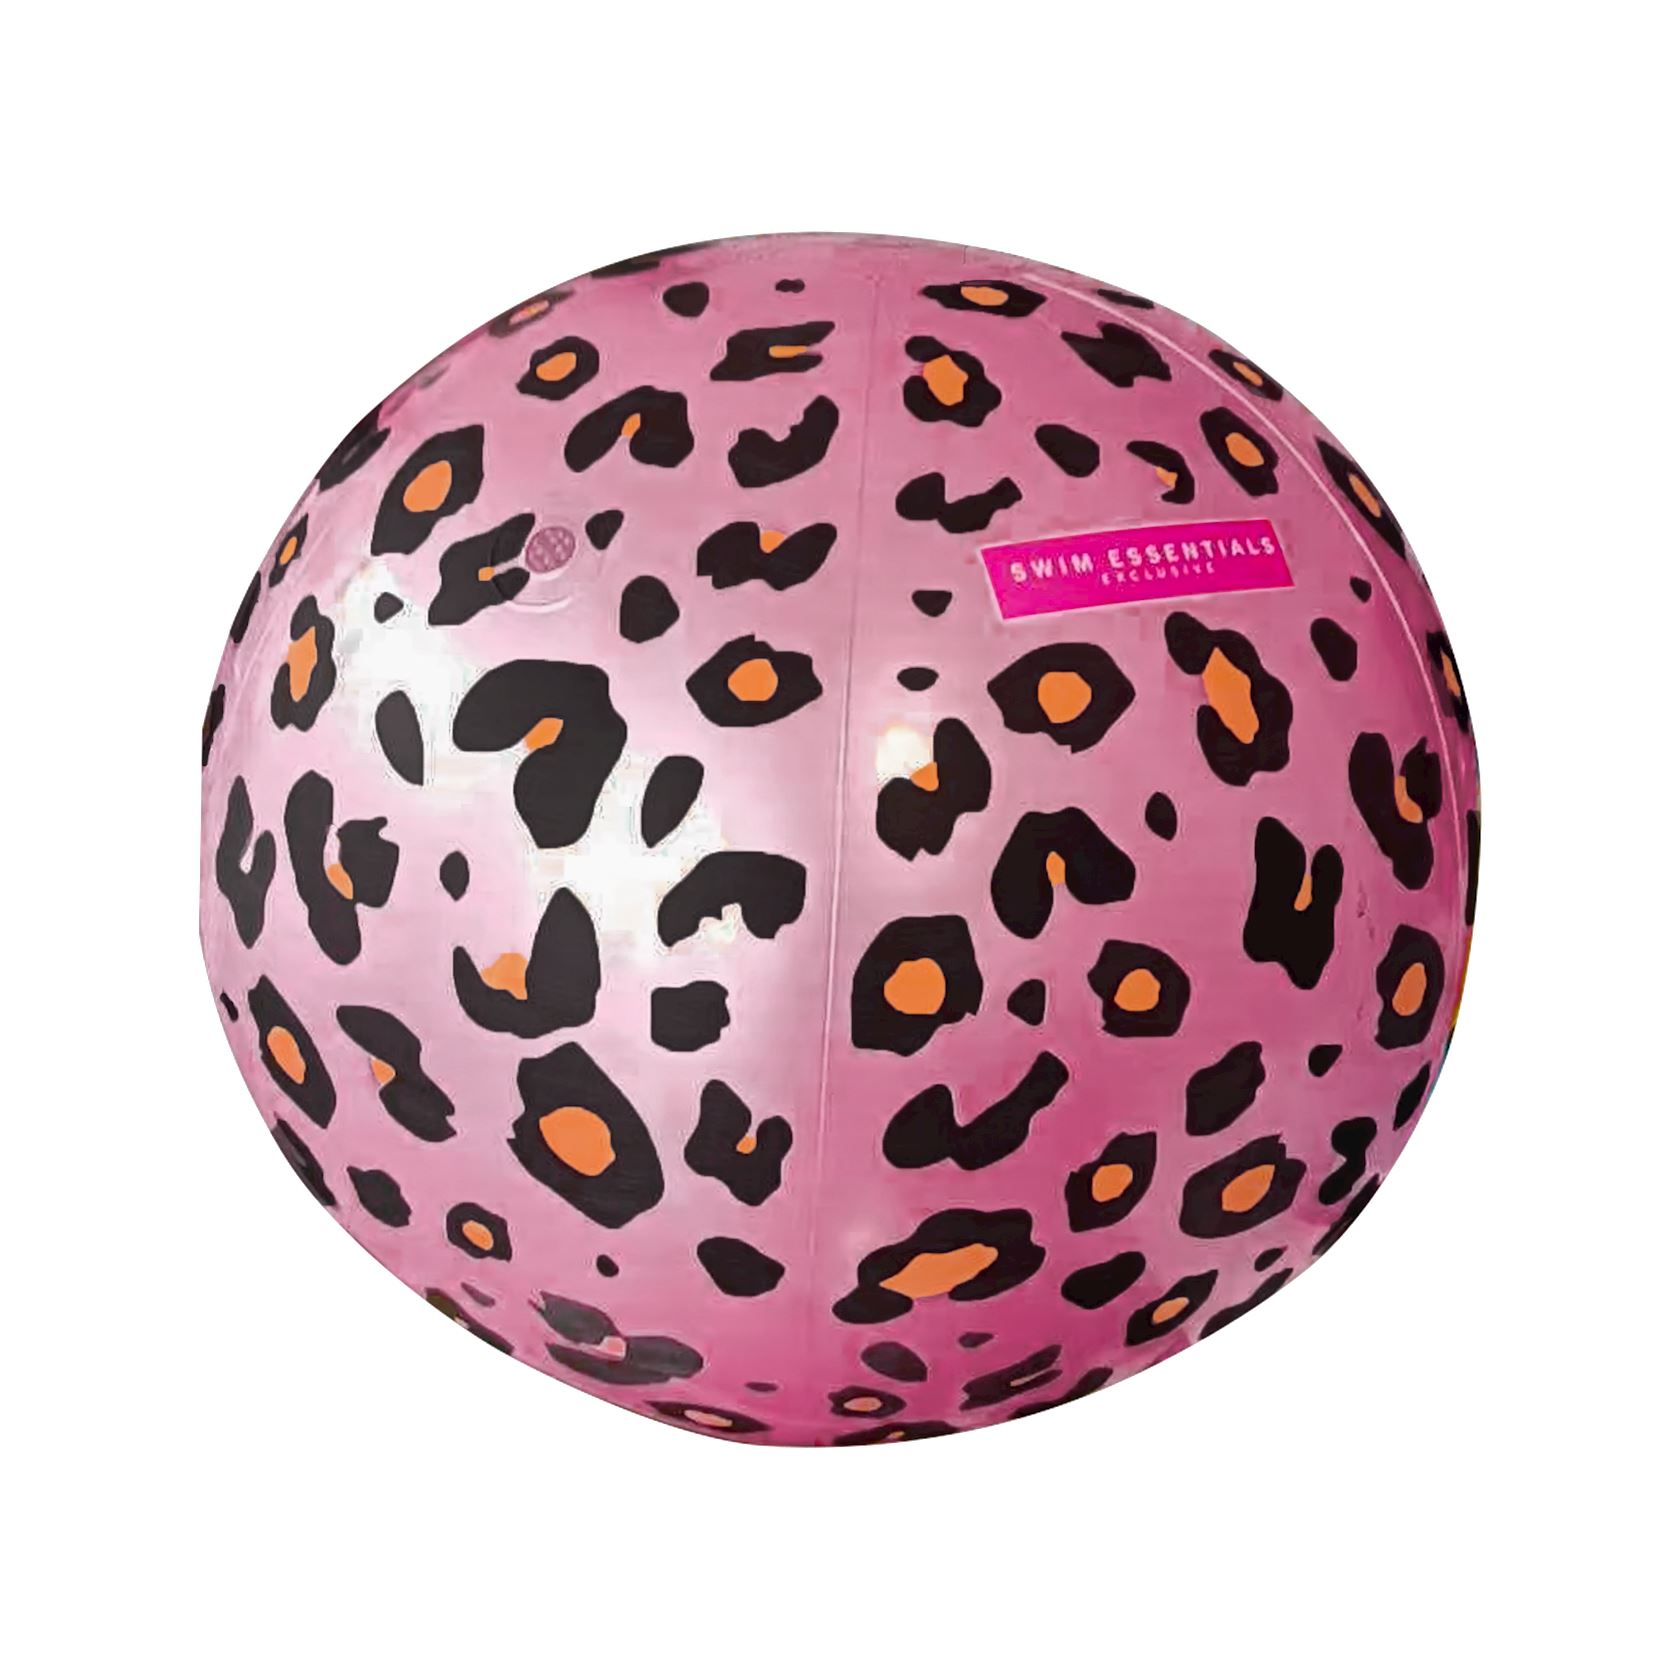 Swim Essentials inflatable beach ball with water sprayer Leopard print - rose gold - Ø57cm